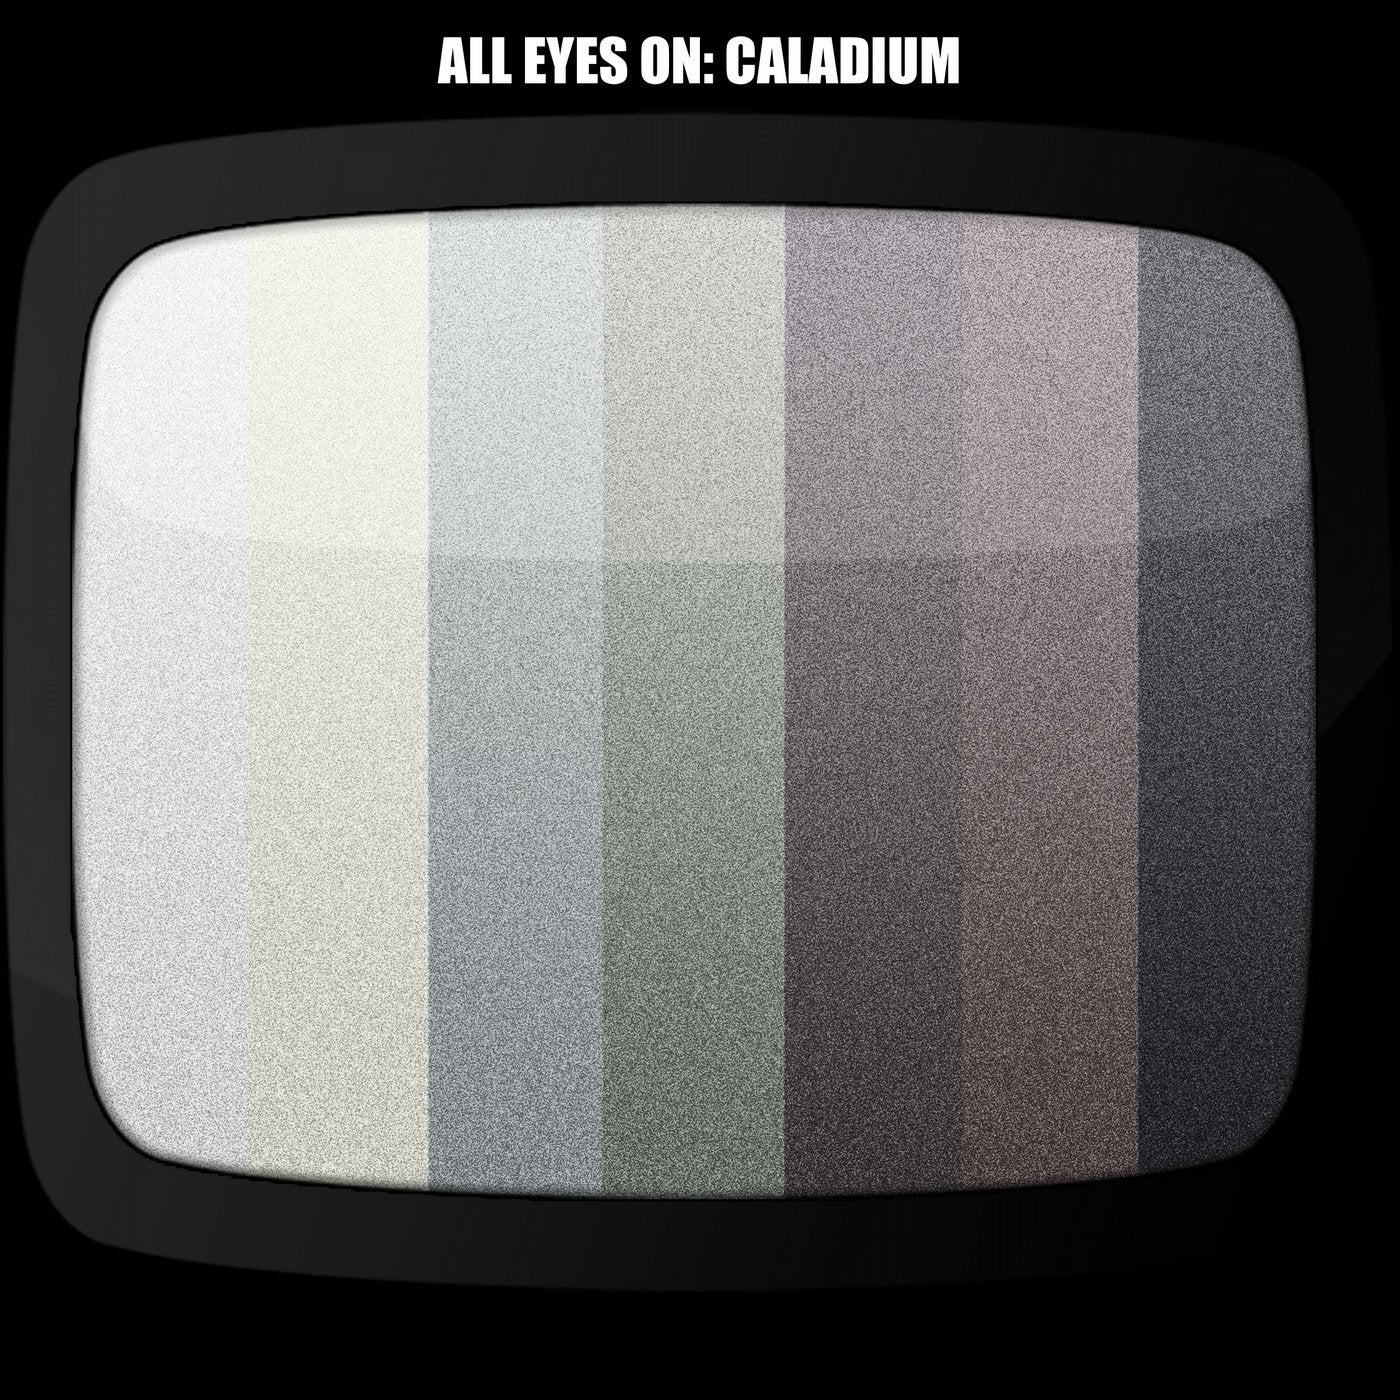 All Eyes On Caladium